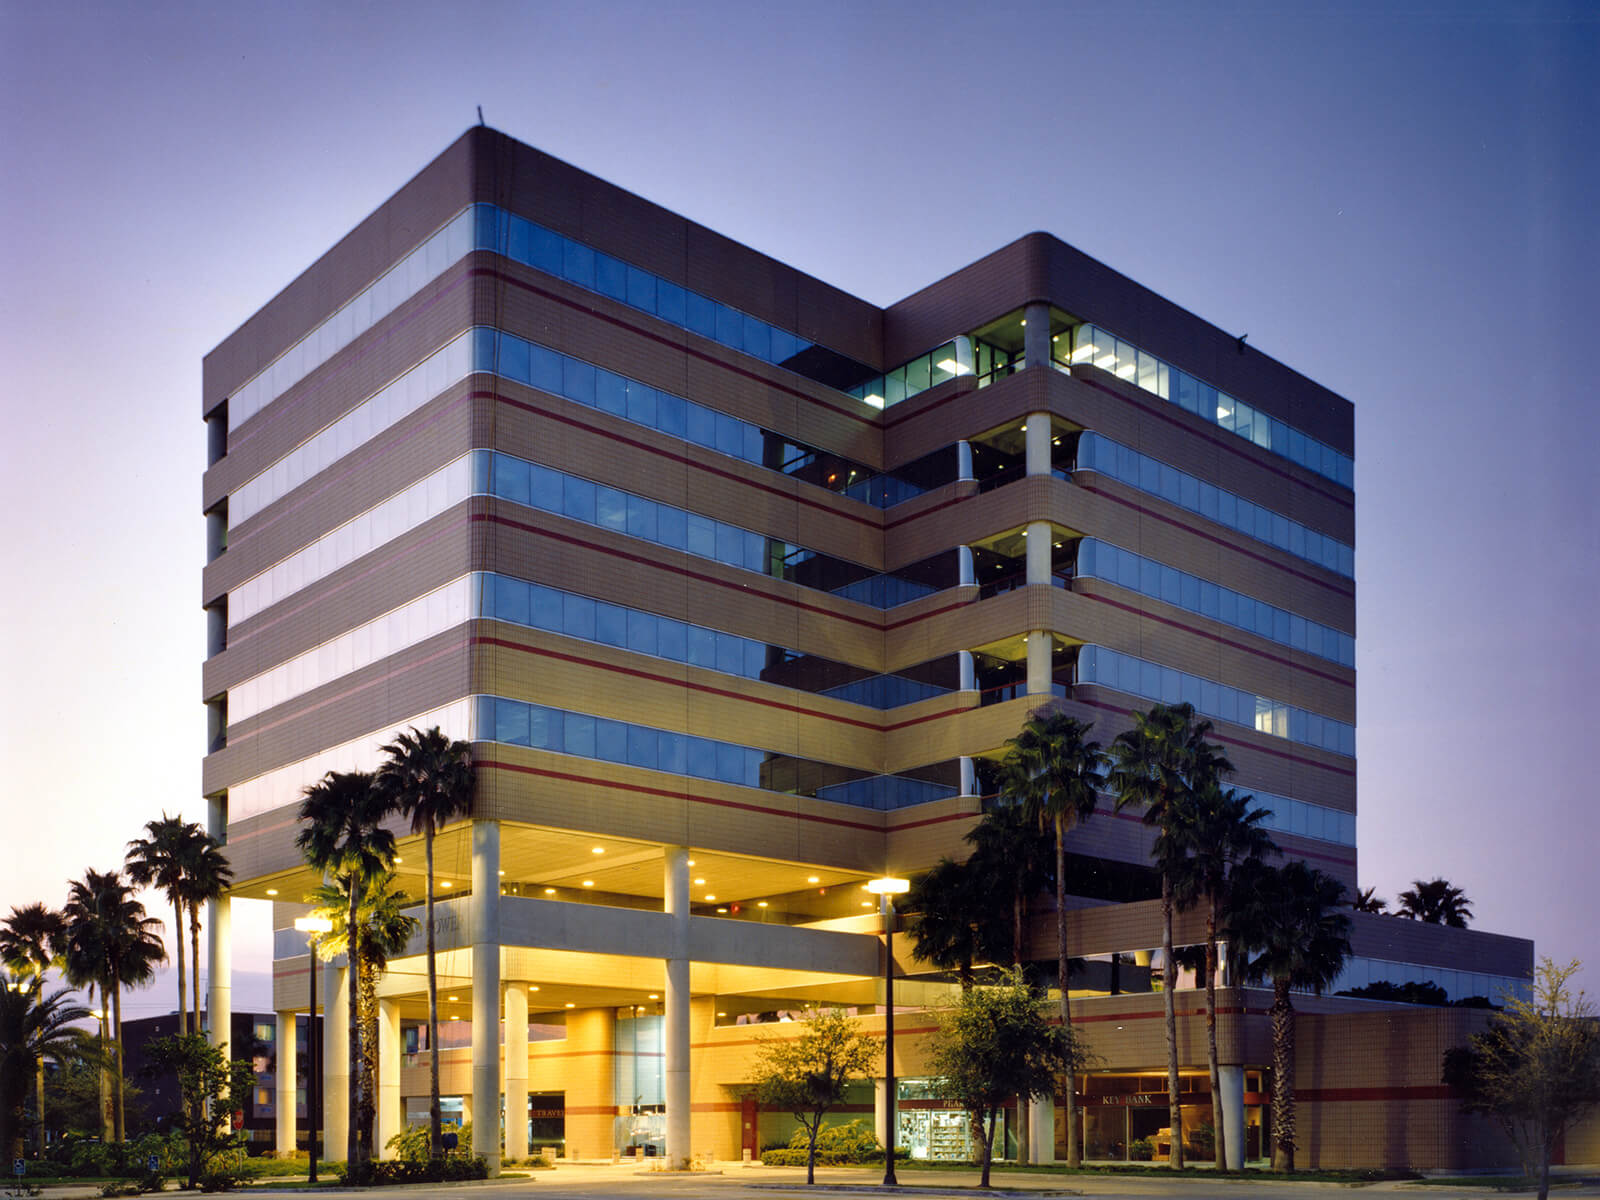 Tampa Medical Tower